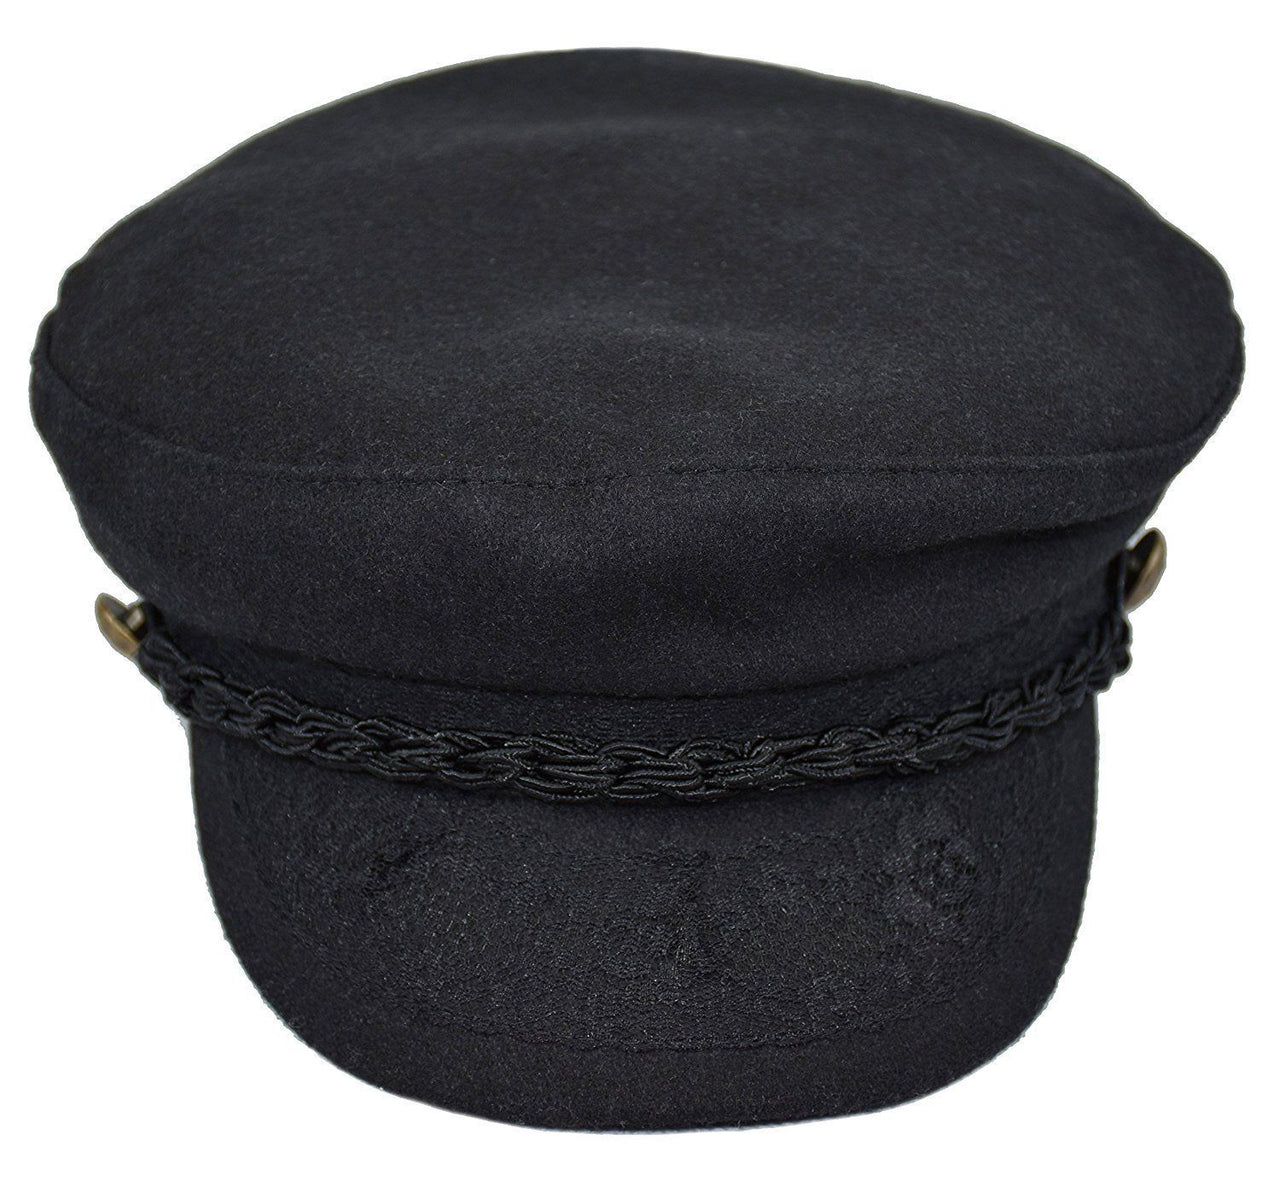 Black Wool Greek Fisherman Hat